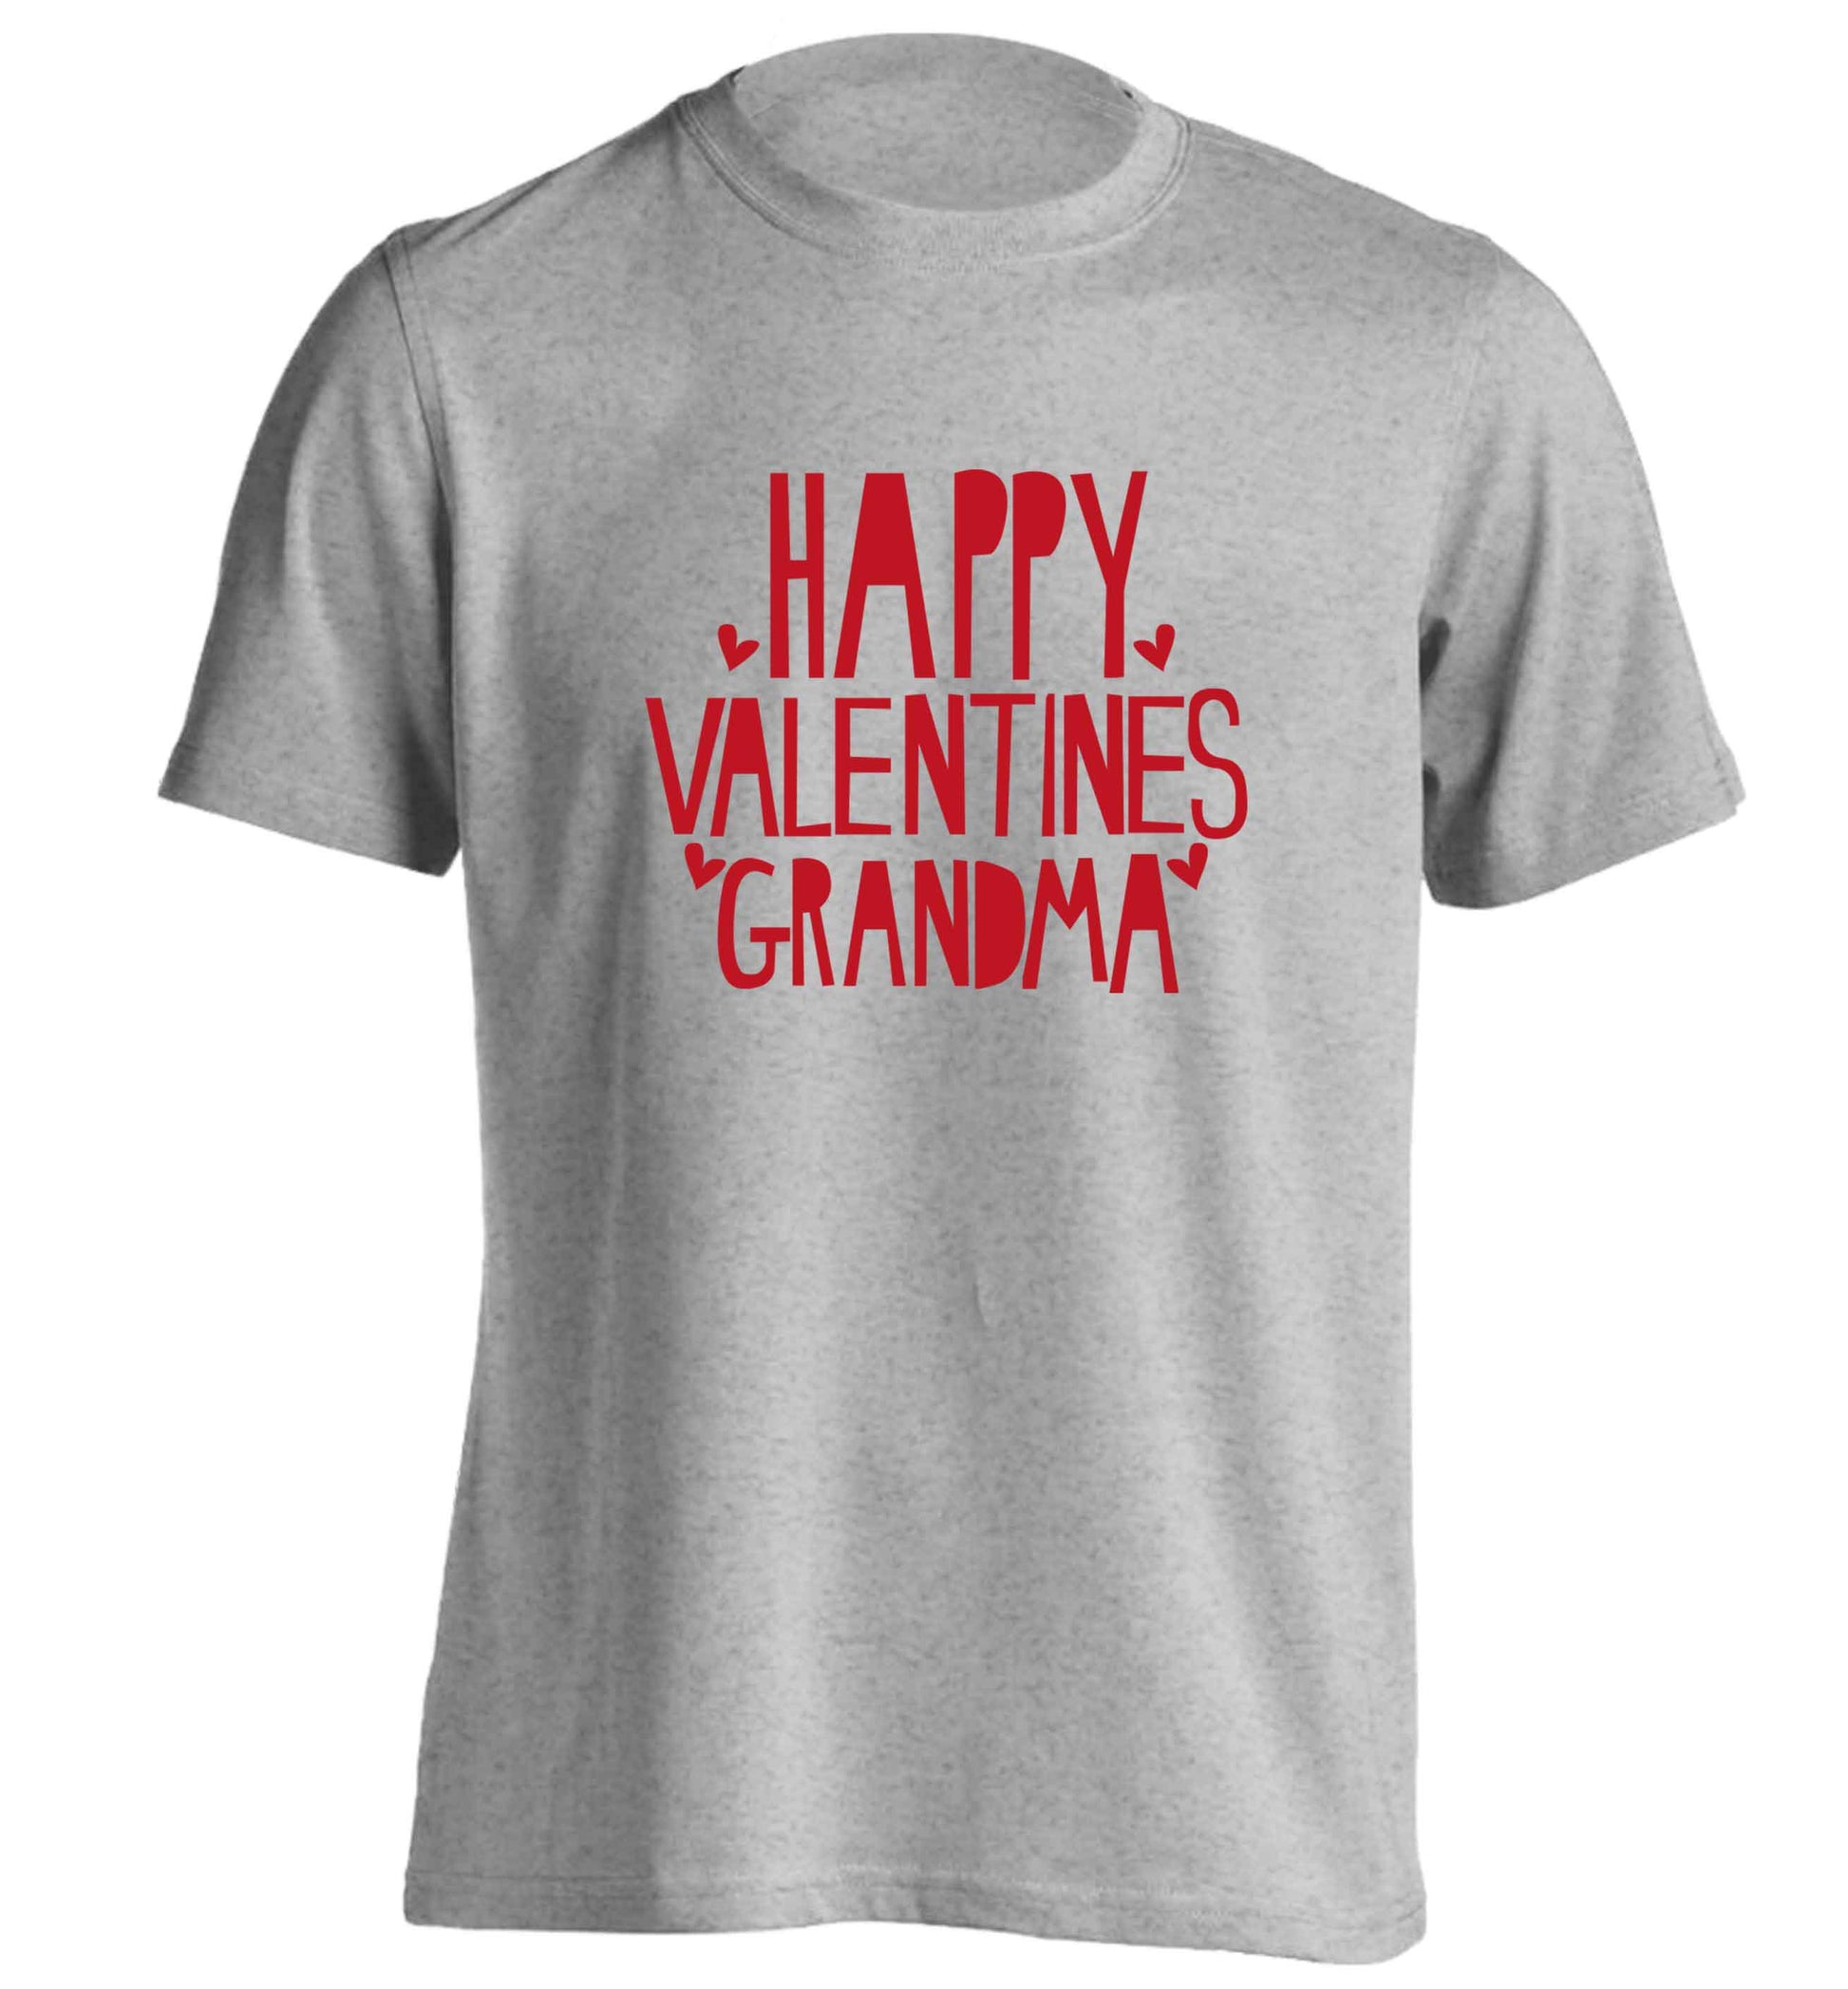 Happy valentines grandma adults unisex grey Tshirt 2XL